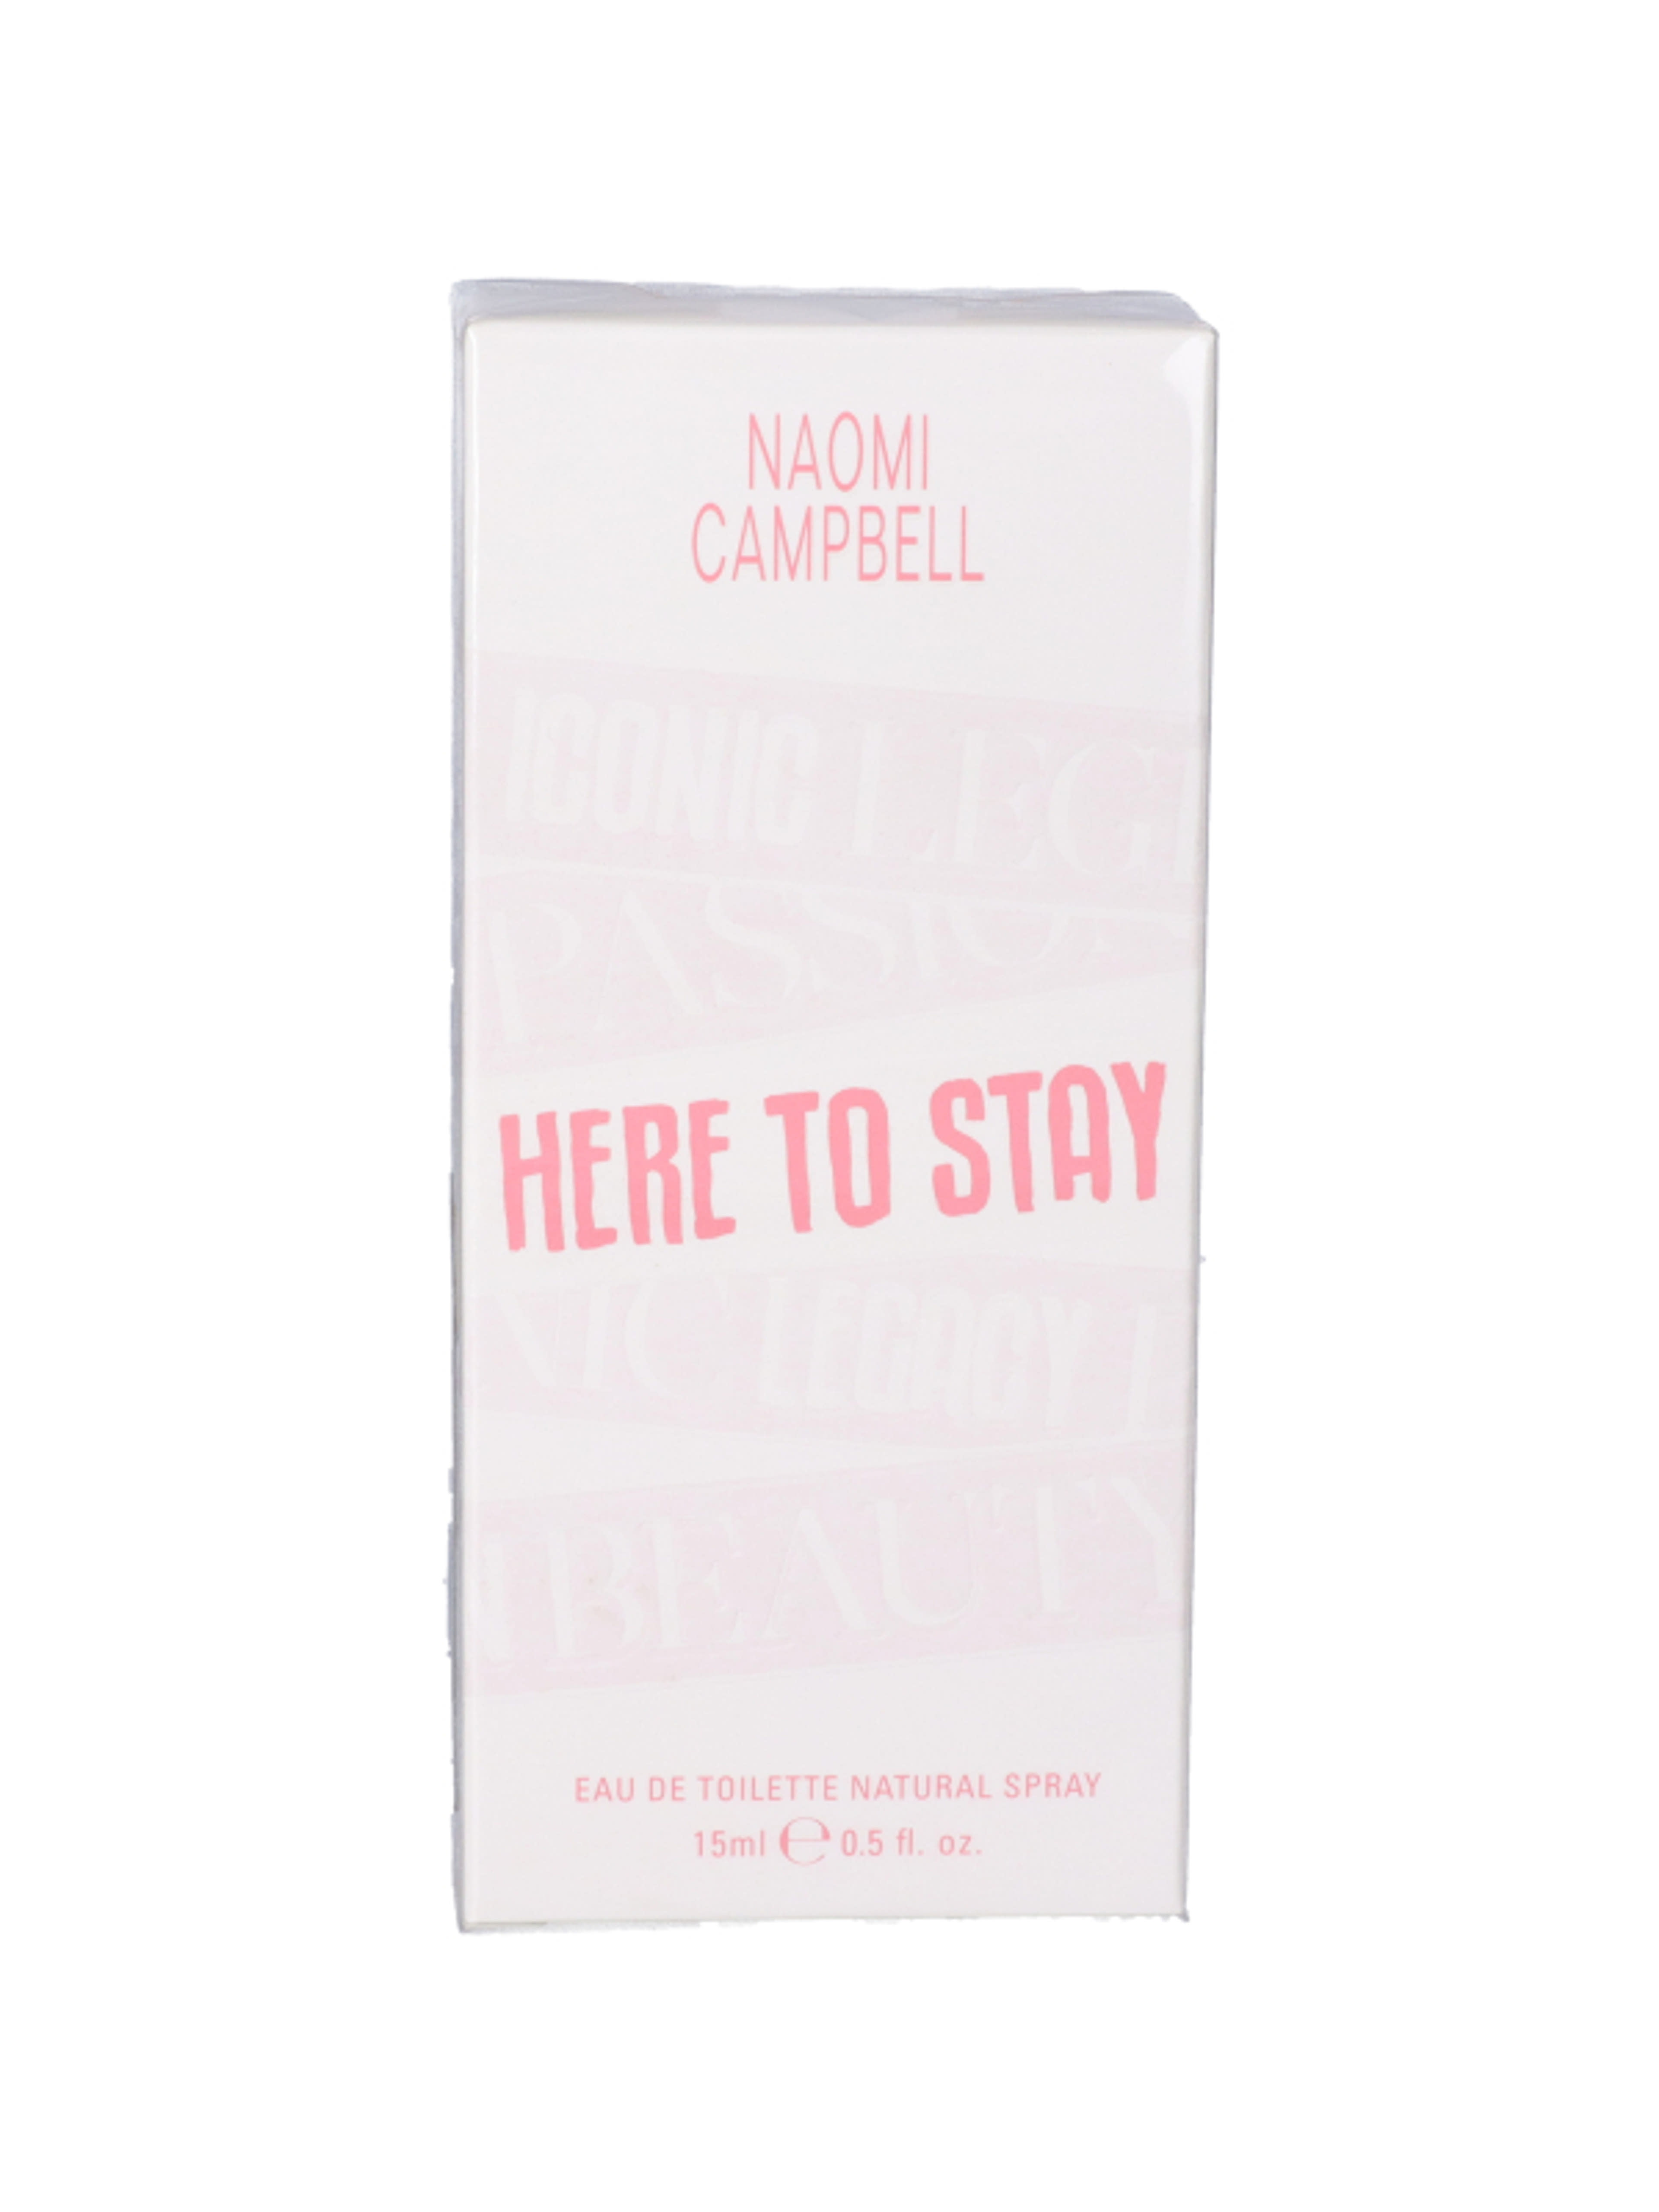 Naomi Campbell Here to Stay noi eau de toilette - 15 ml